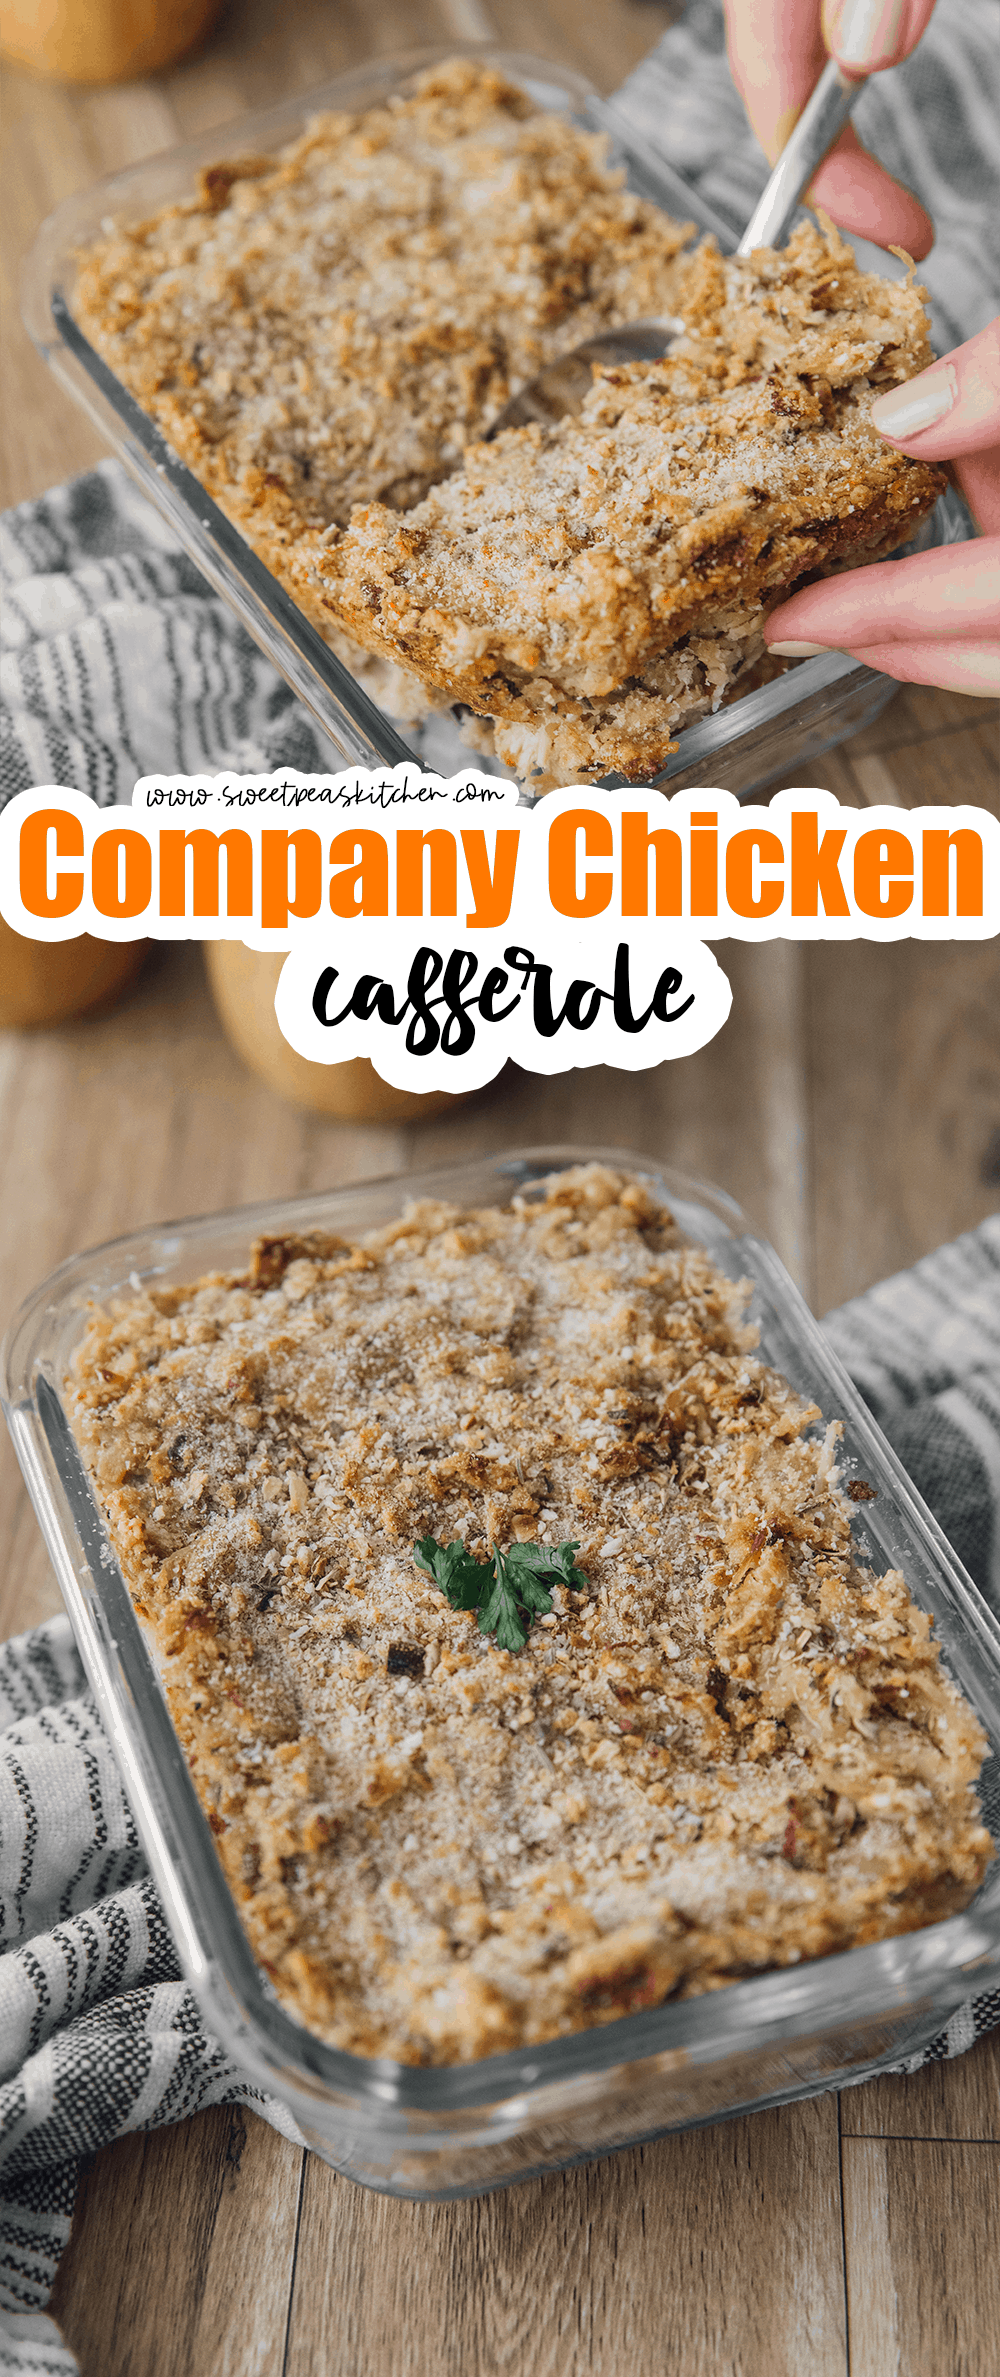 Company Chicken Casserole